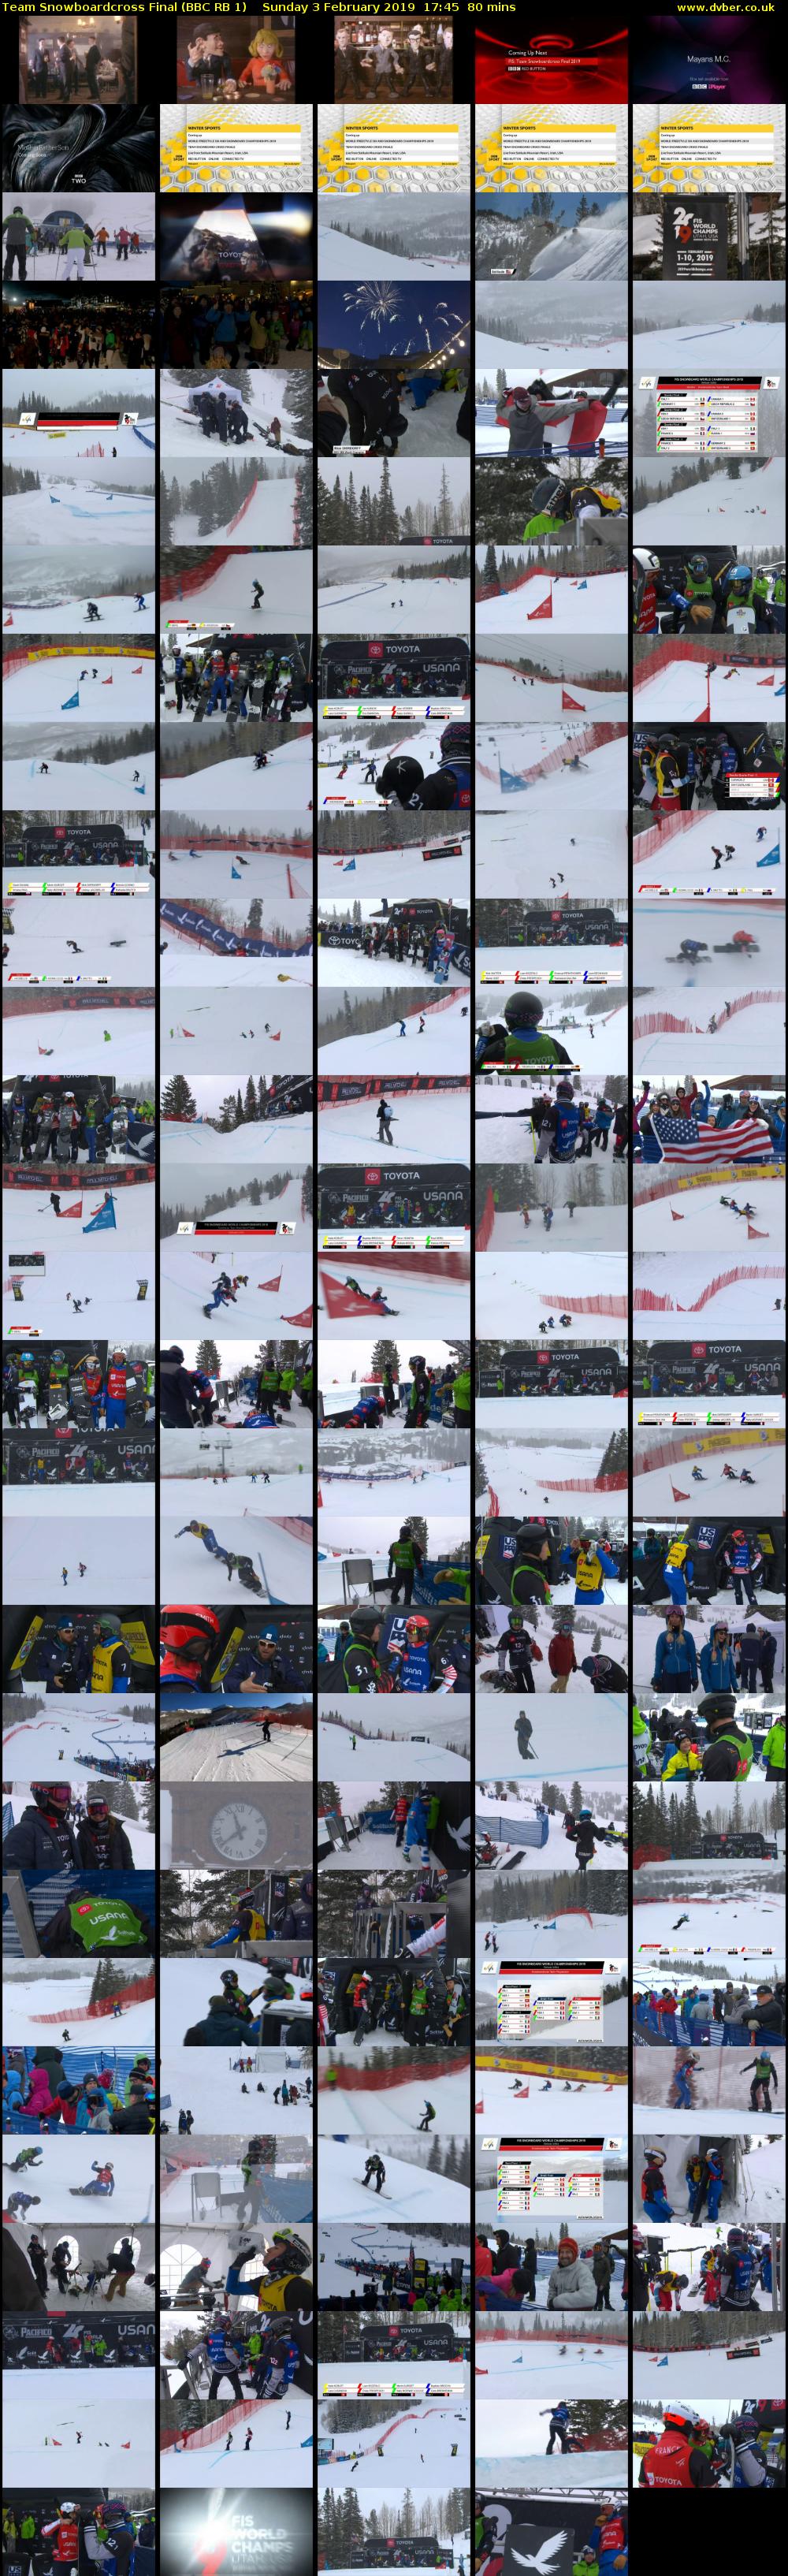 Team Snowboardcross Final (BBC RB 1) Sunday 3 February 2019 17:45 - 19:05